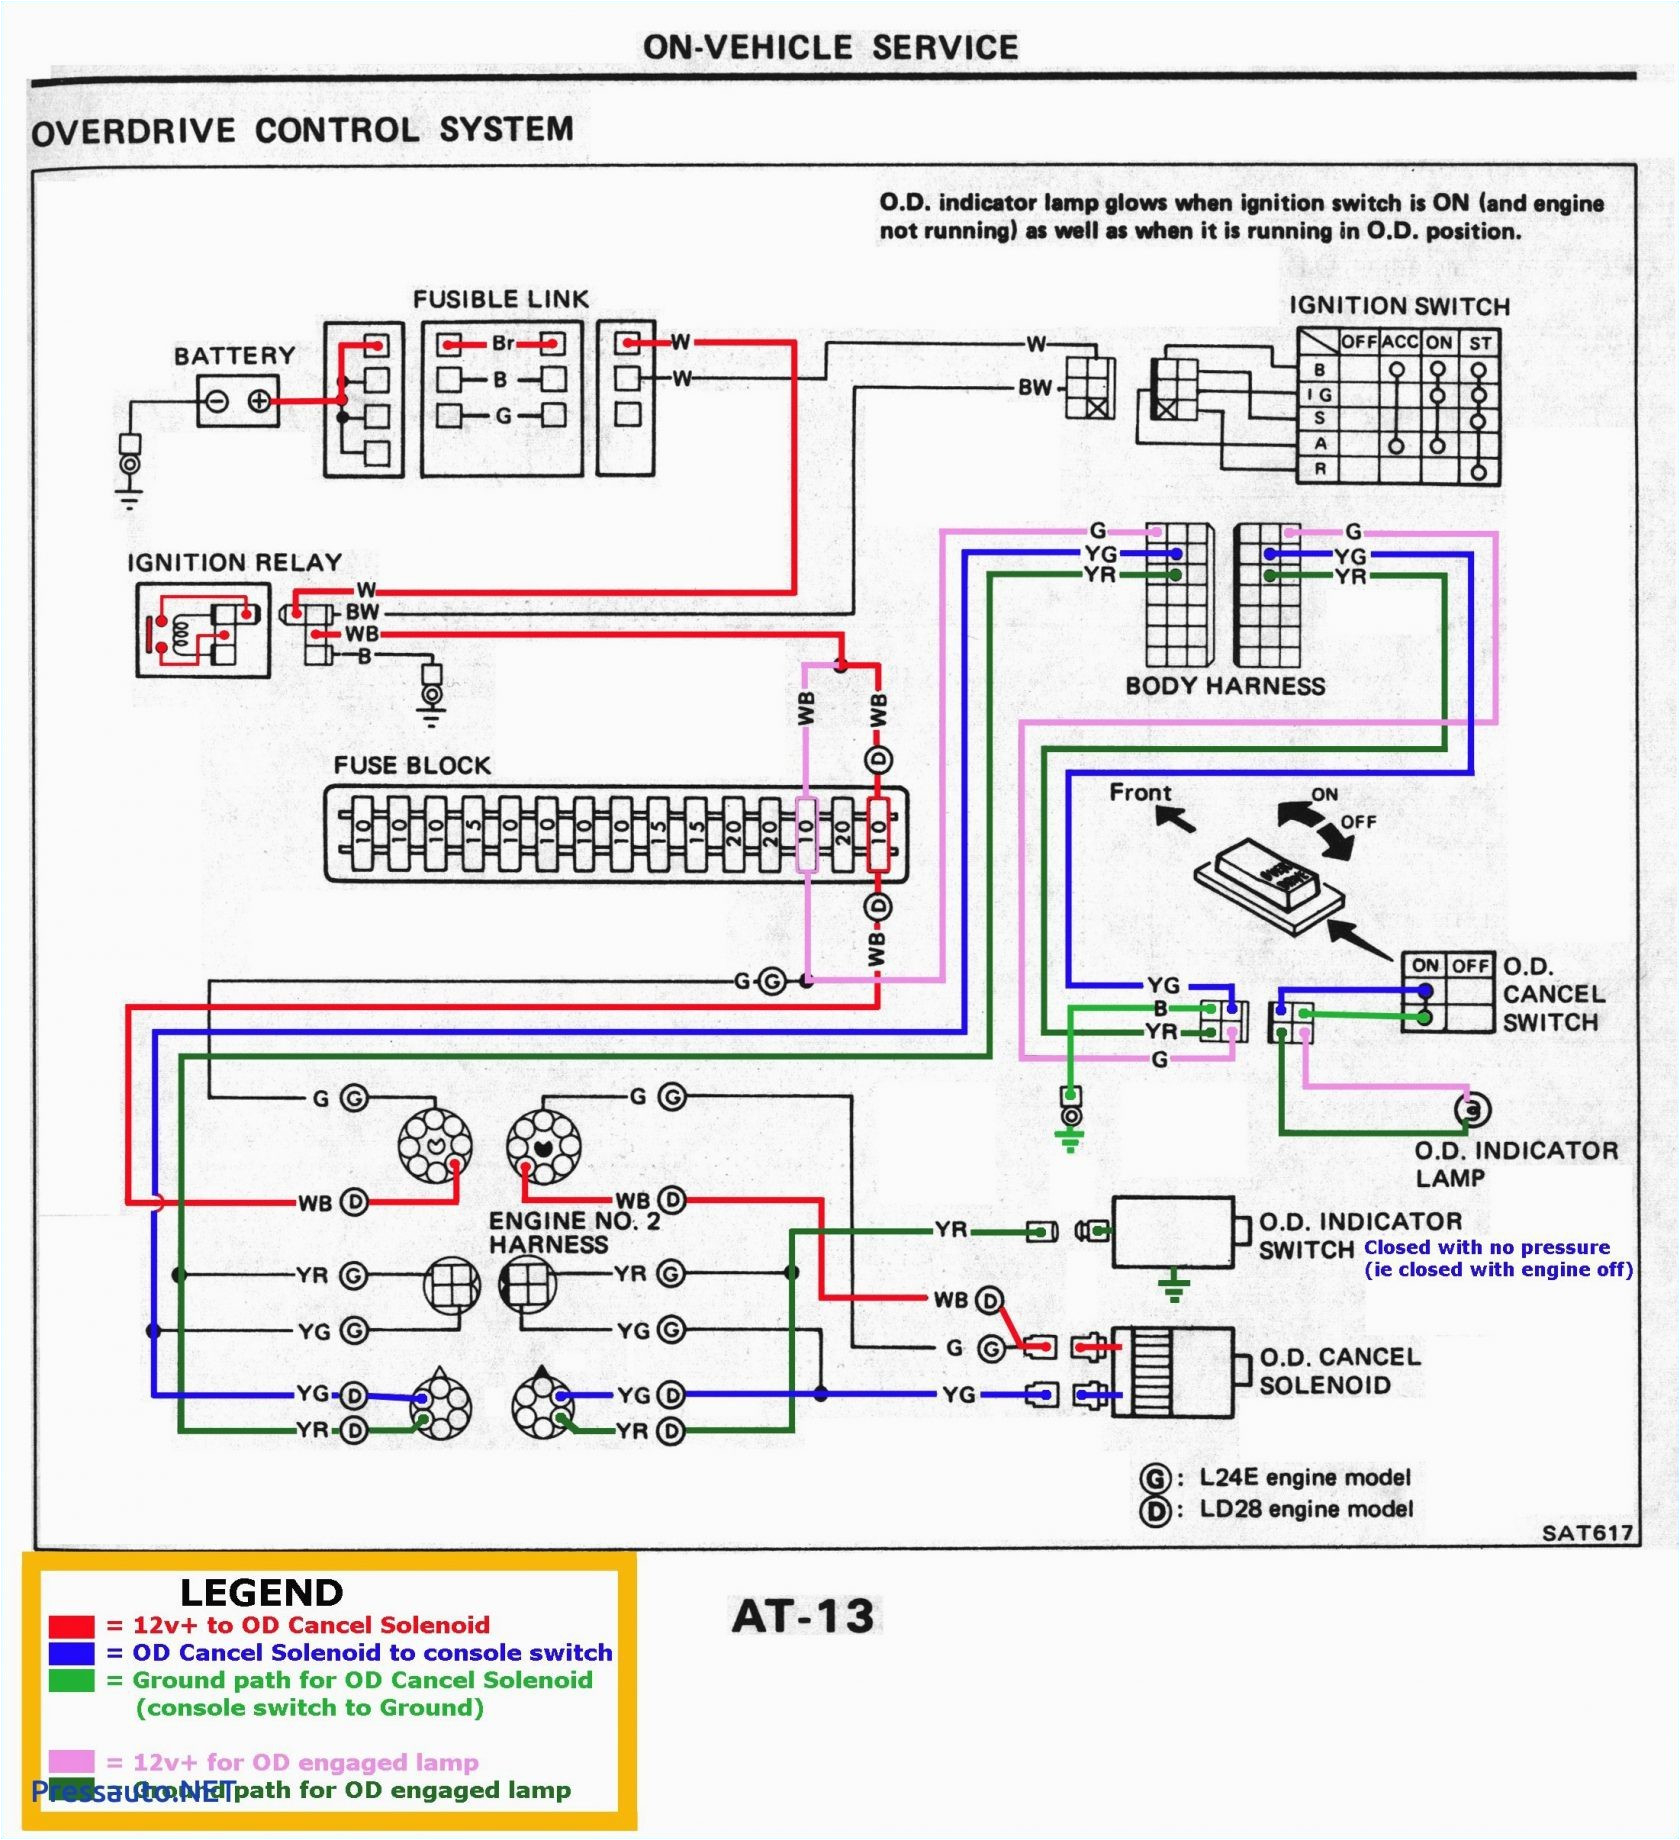 car wire harness diagrams data schematic diagram car wire harness diagrams